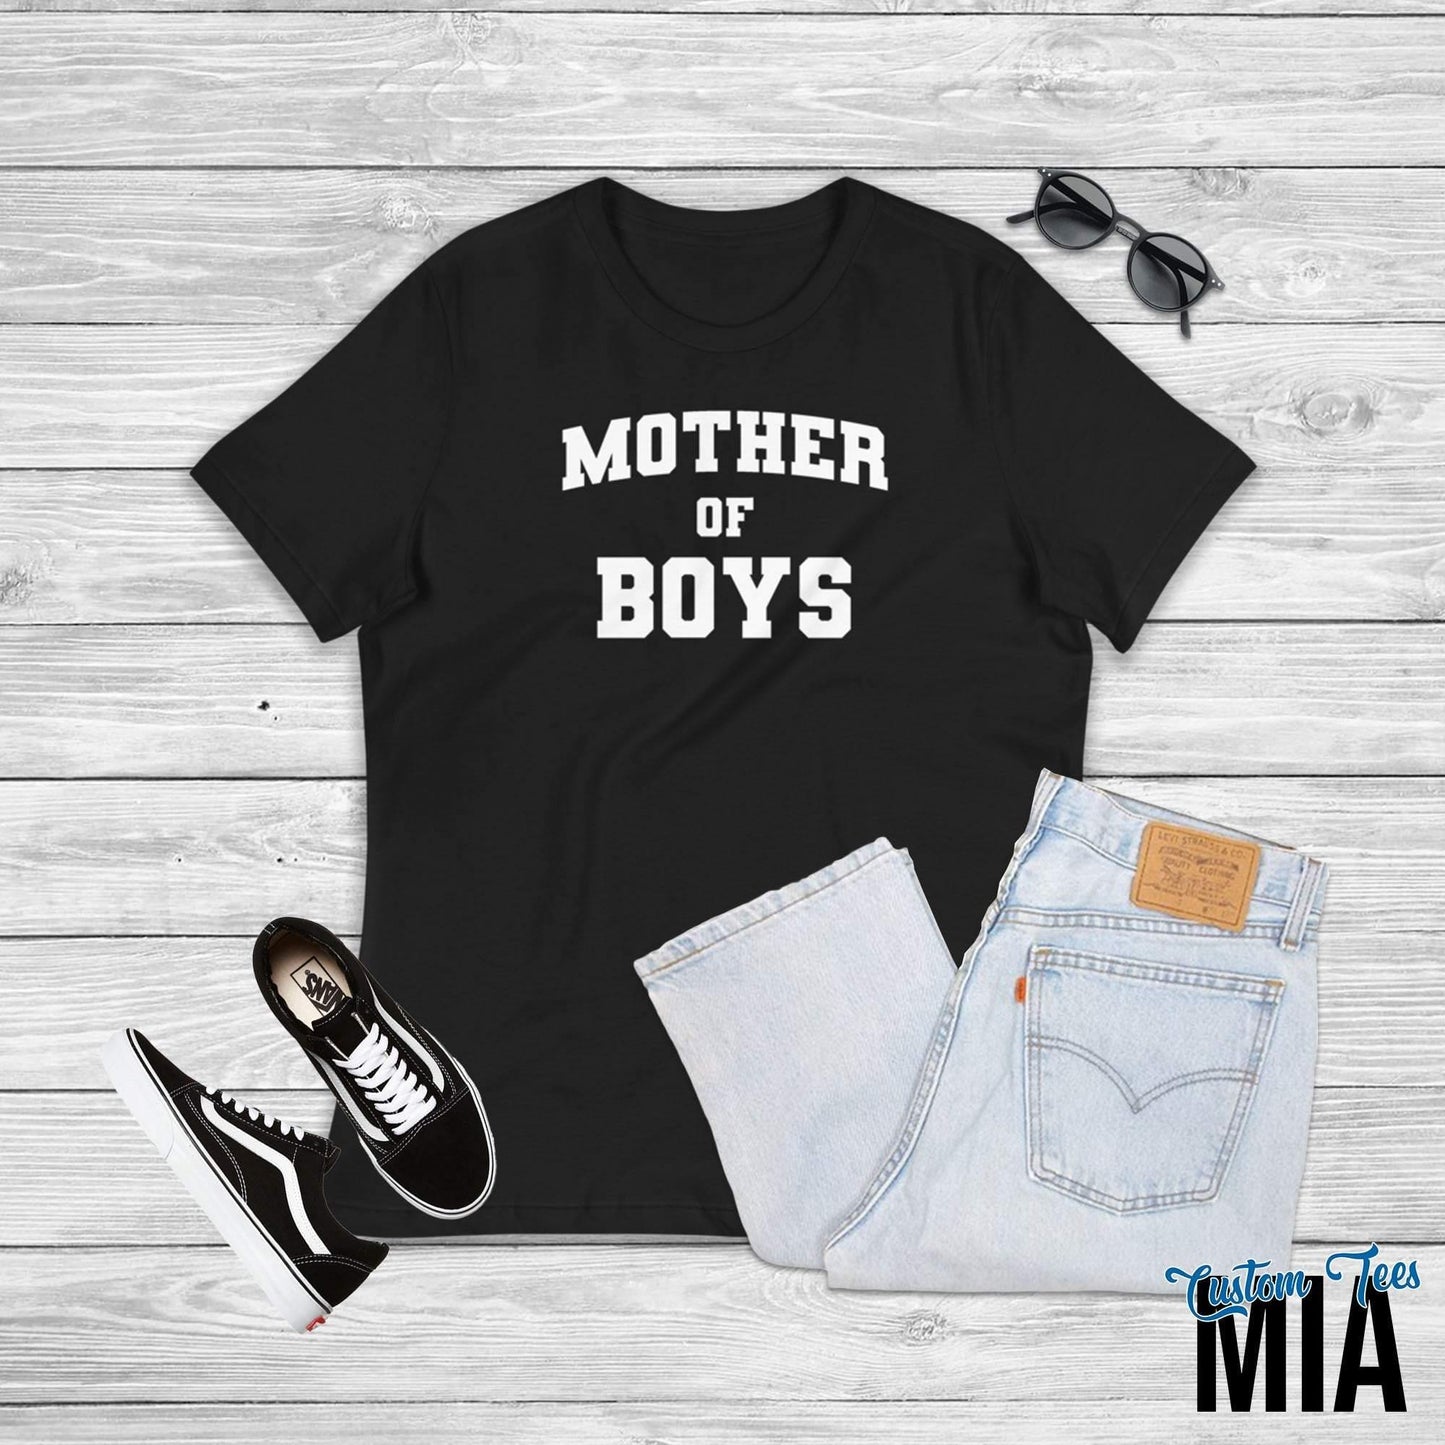 Mother of Boys Shirt - Custom Tees MIA